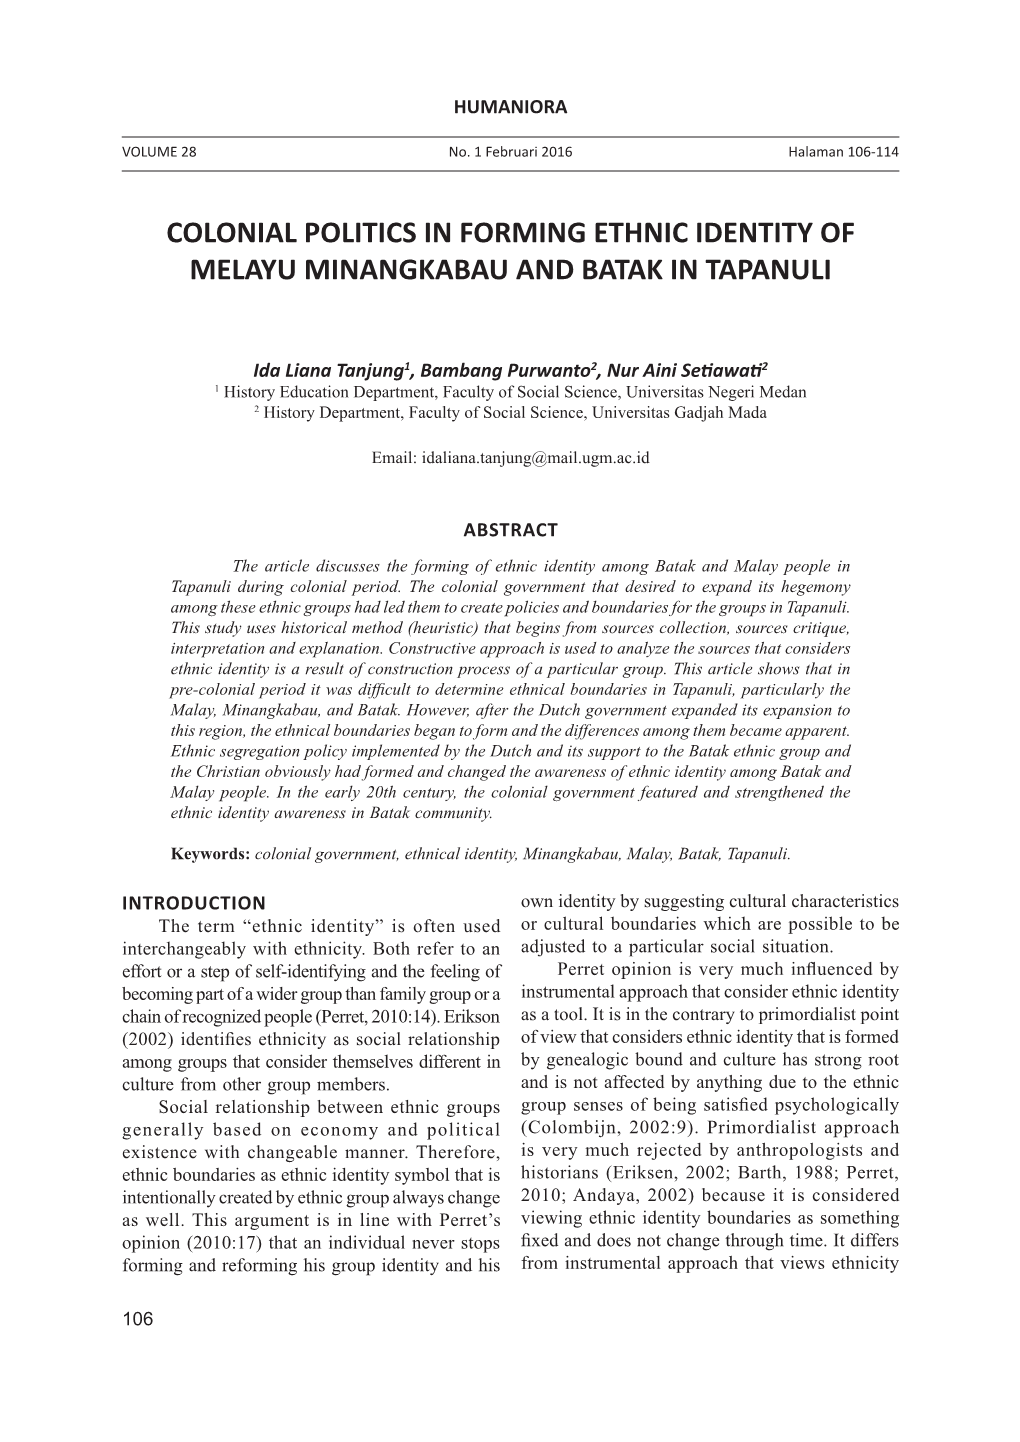 Colonial Politics in Forming Ethnic Identity of Melayu Minangkabau and Batak in Tapanuli